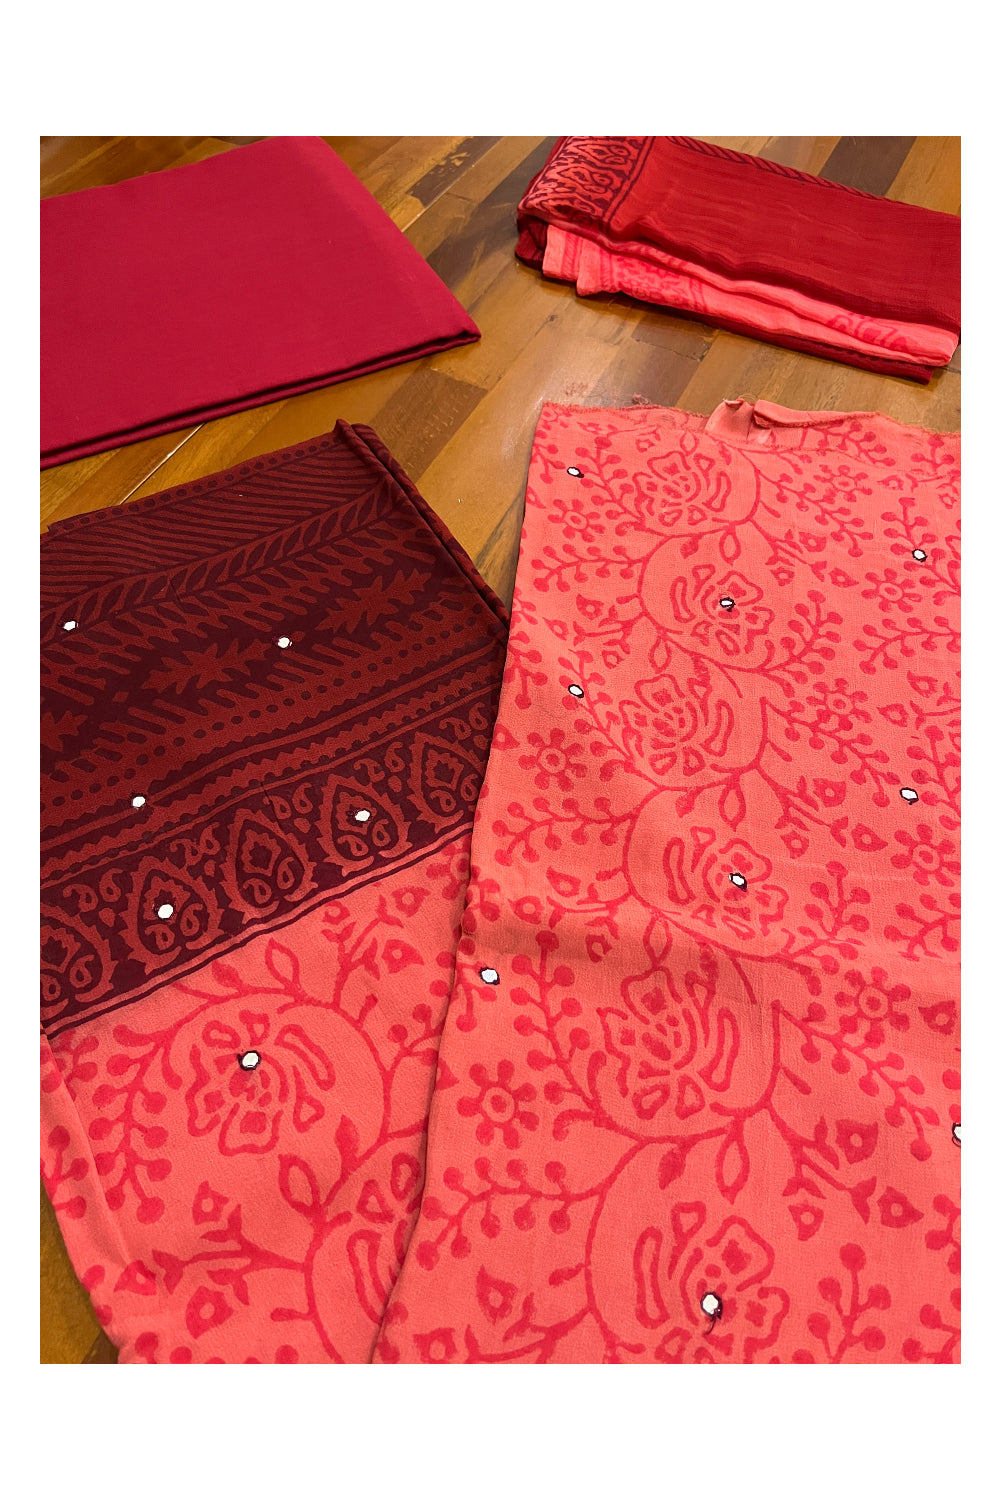 Southloom™ Crepe Churidar Salwar Suit Material in Dark Peach with Floral Prints